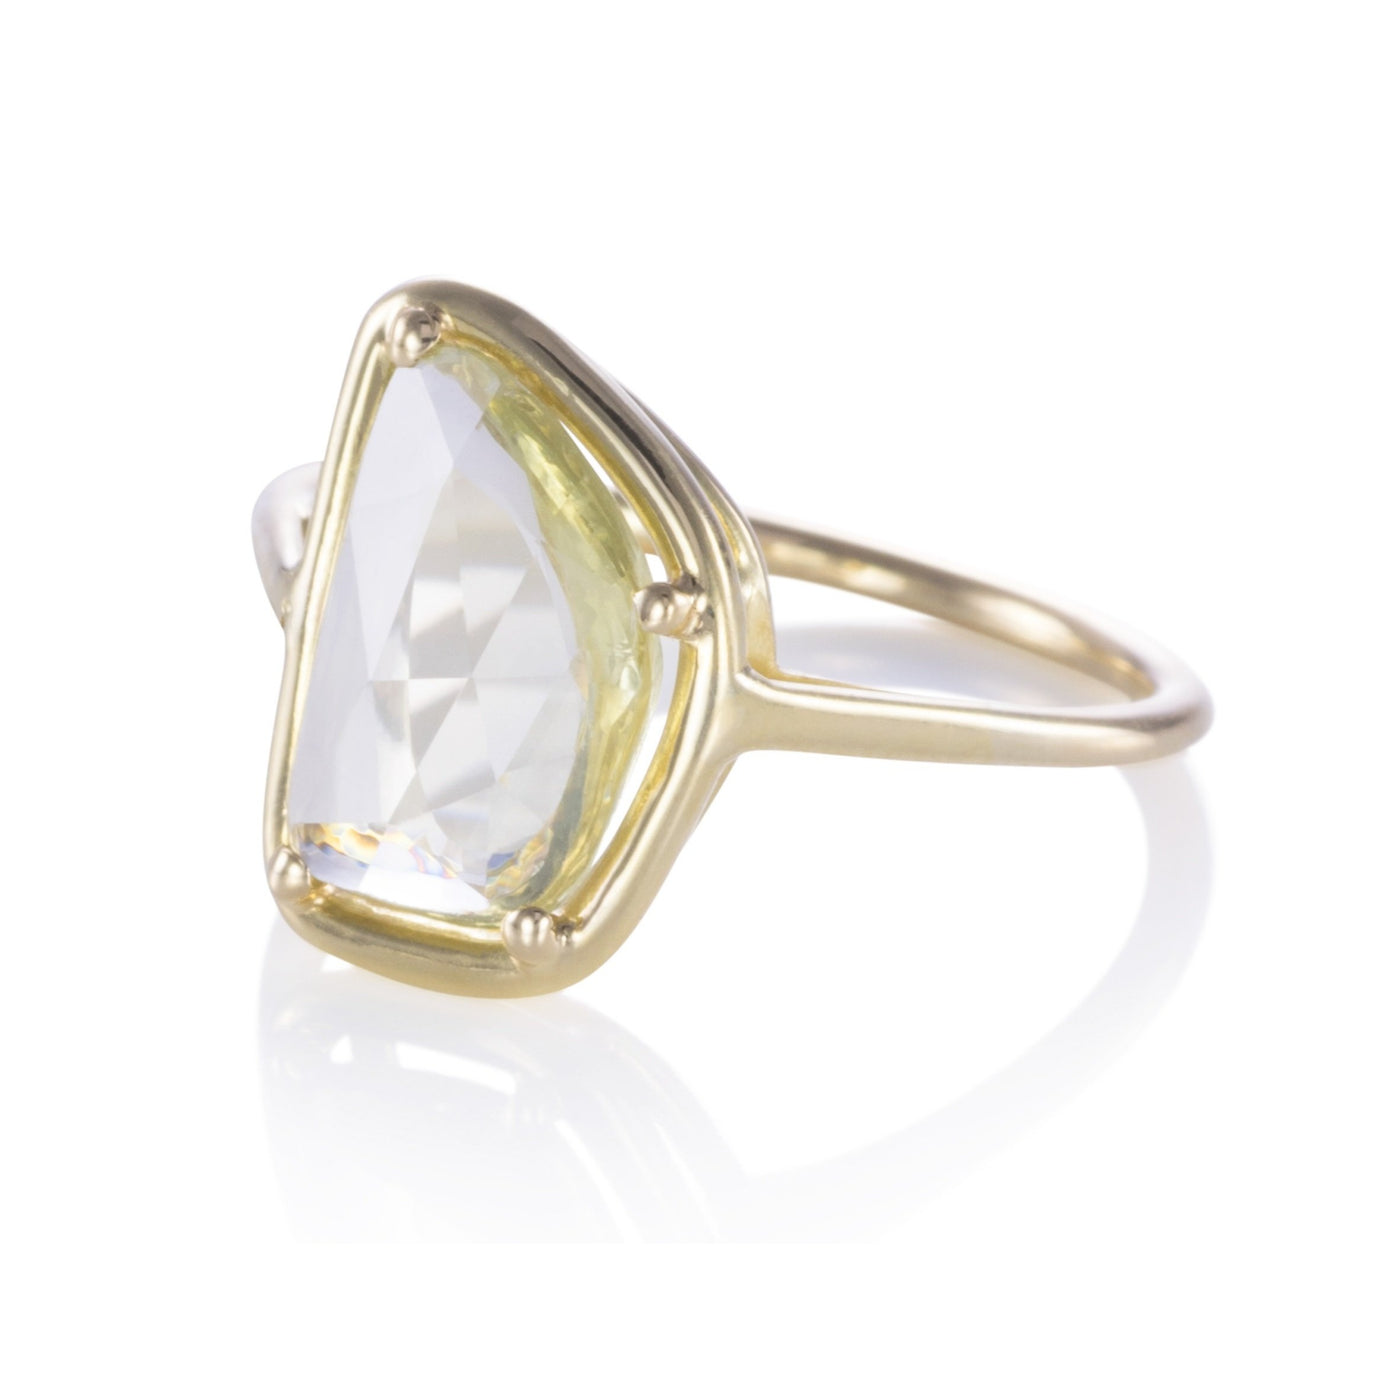 Sapphire Petal Ring "Maxi" - Pastel yellow sapphire